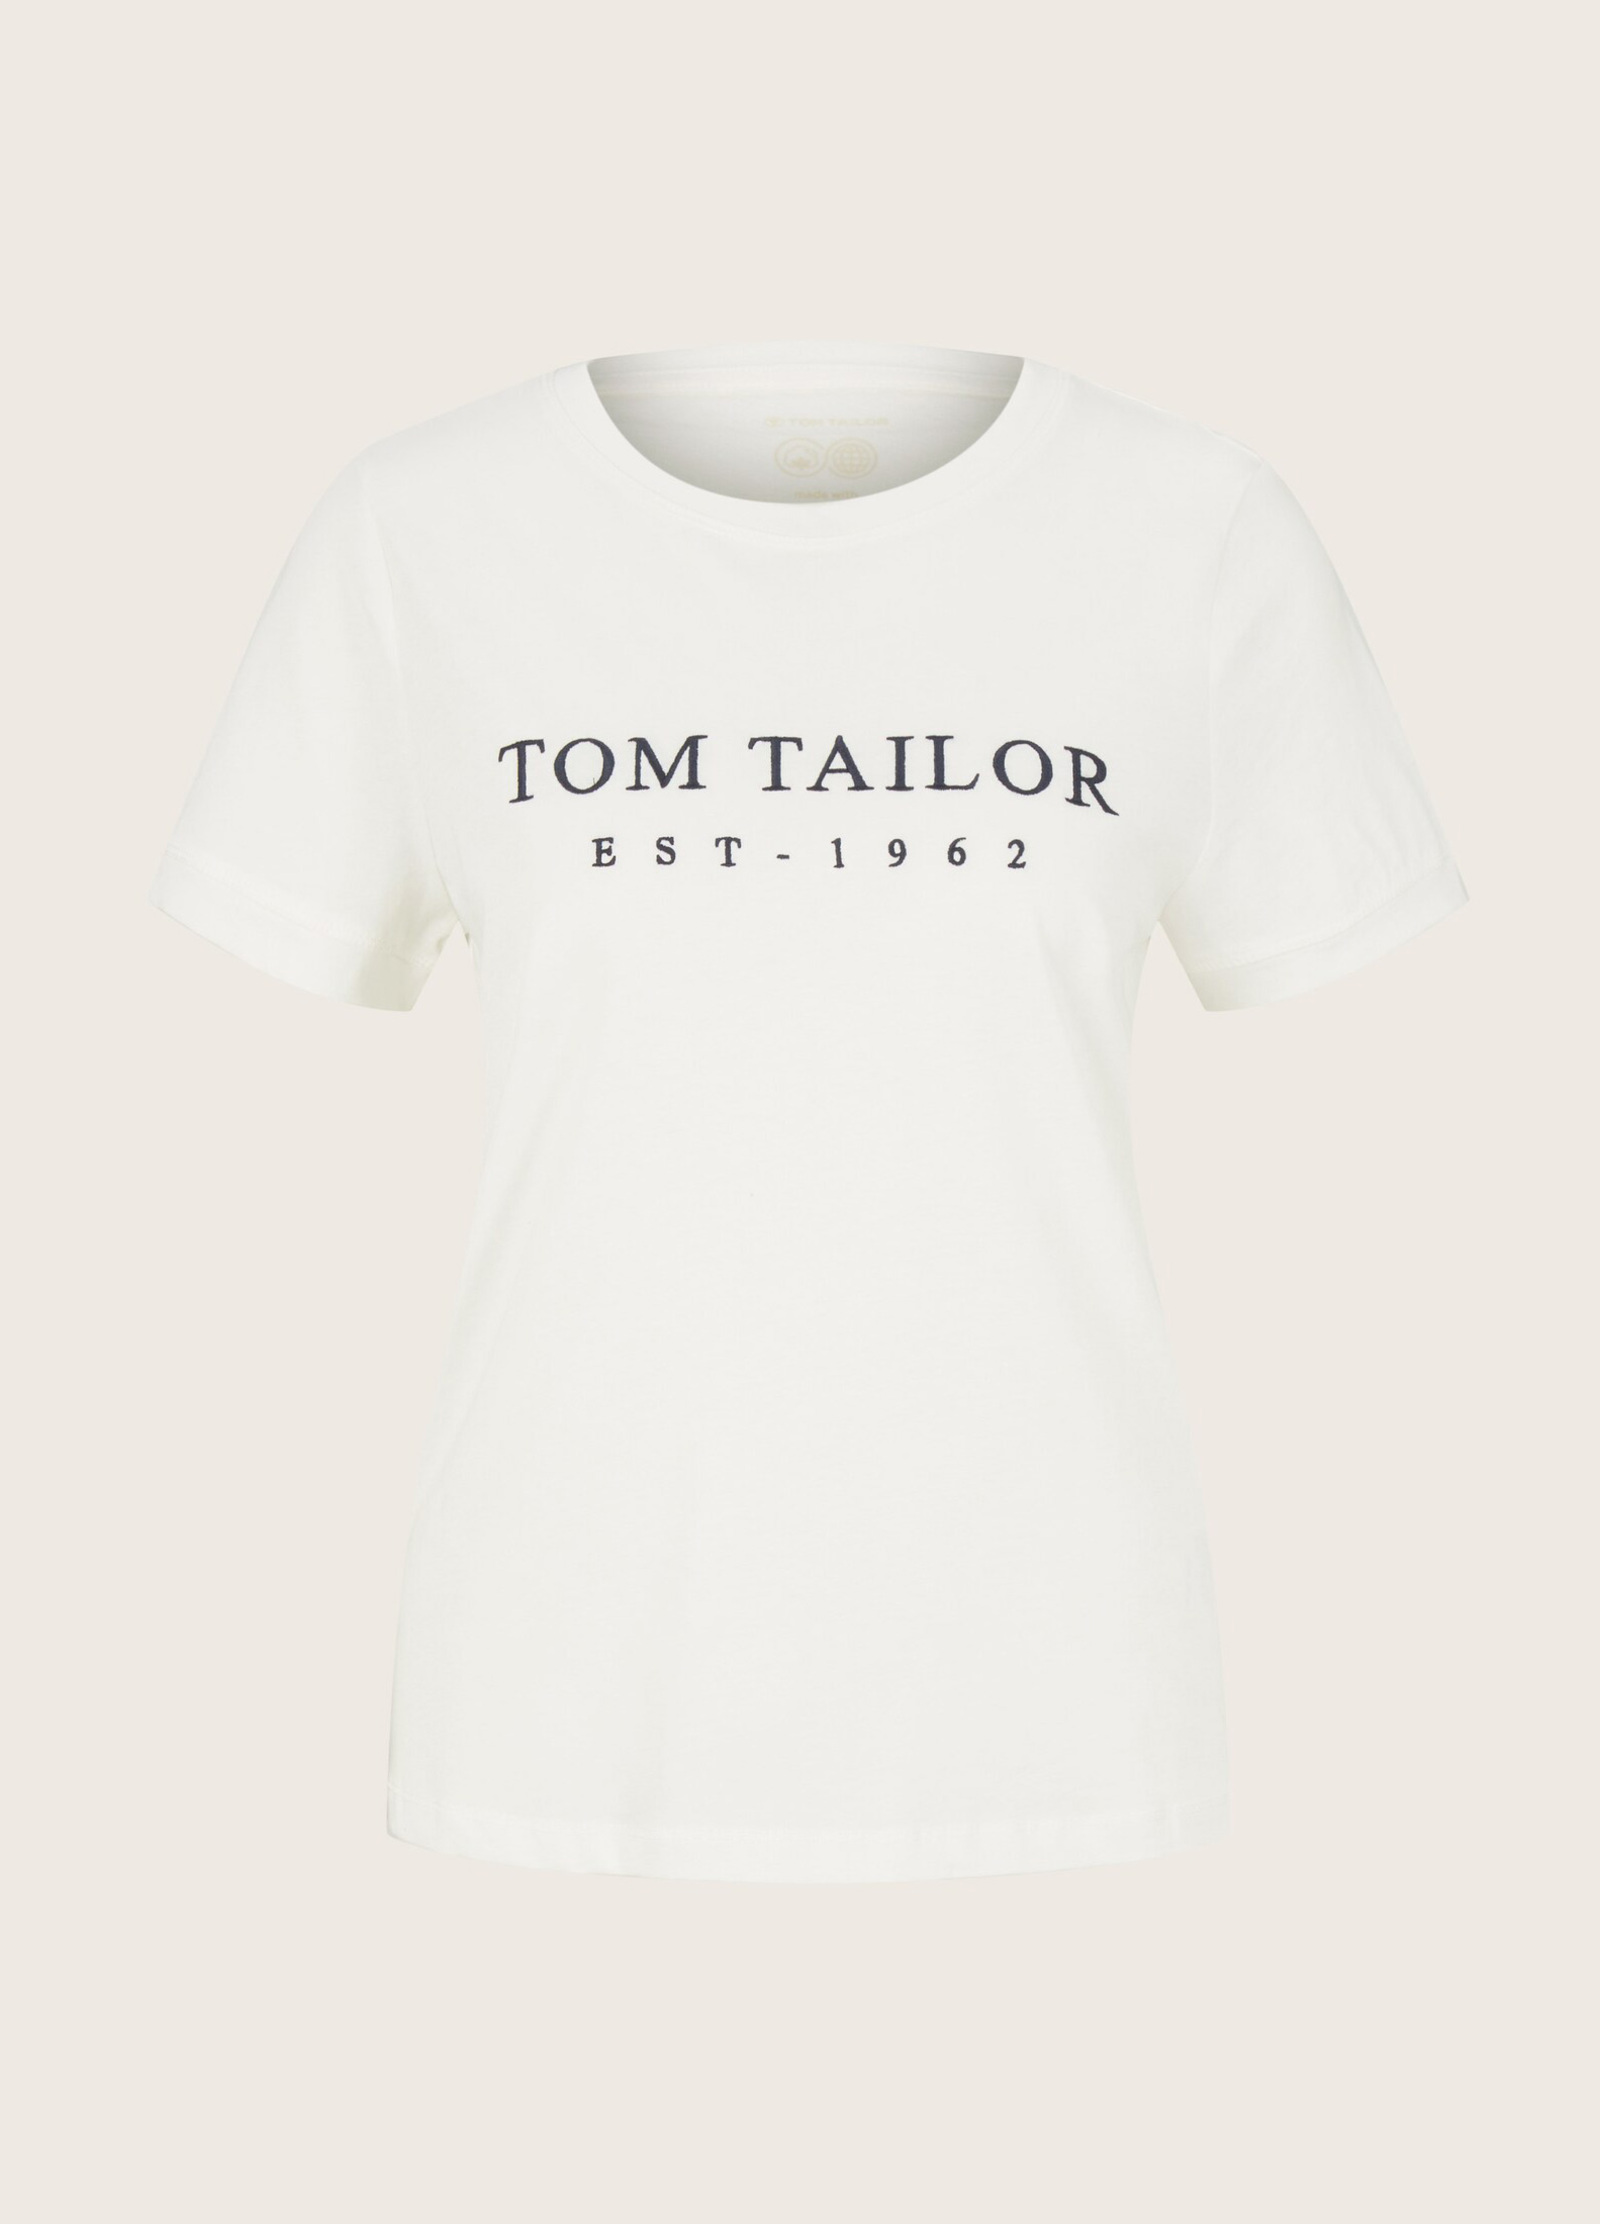 Tom Tailor® T-shirt L Whisper White Print Rozmiar A With 